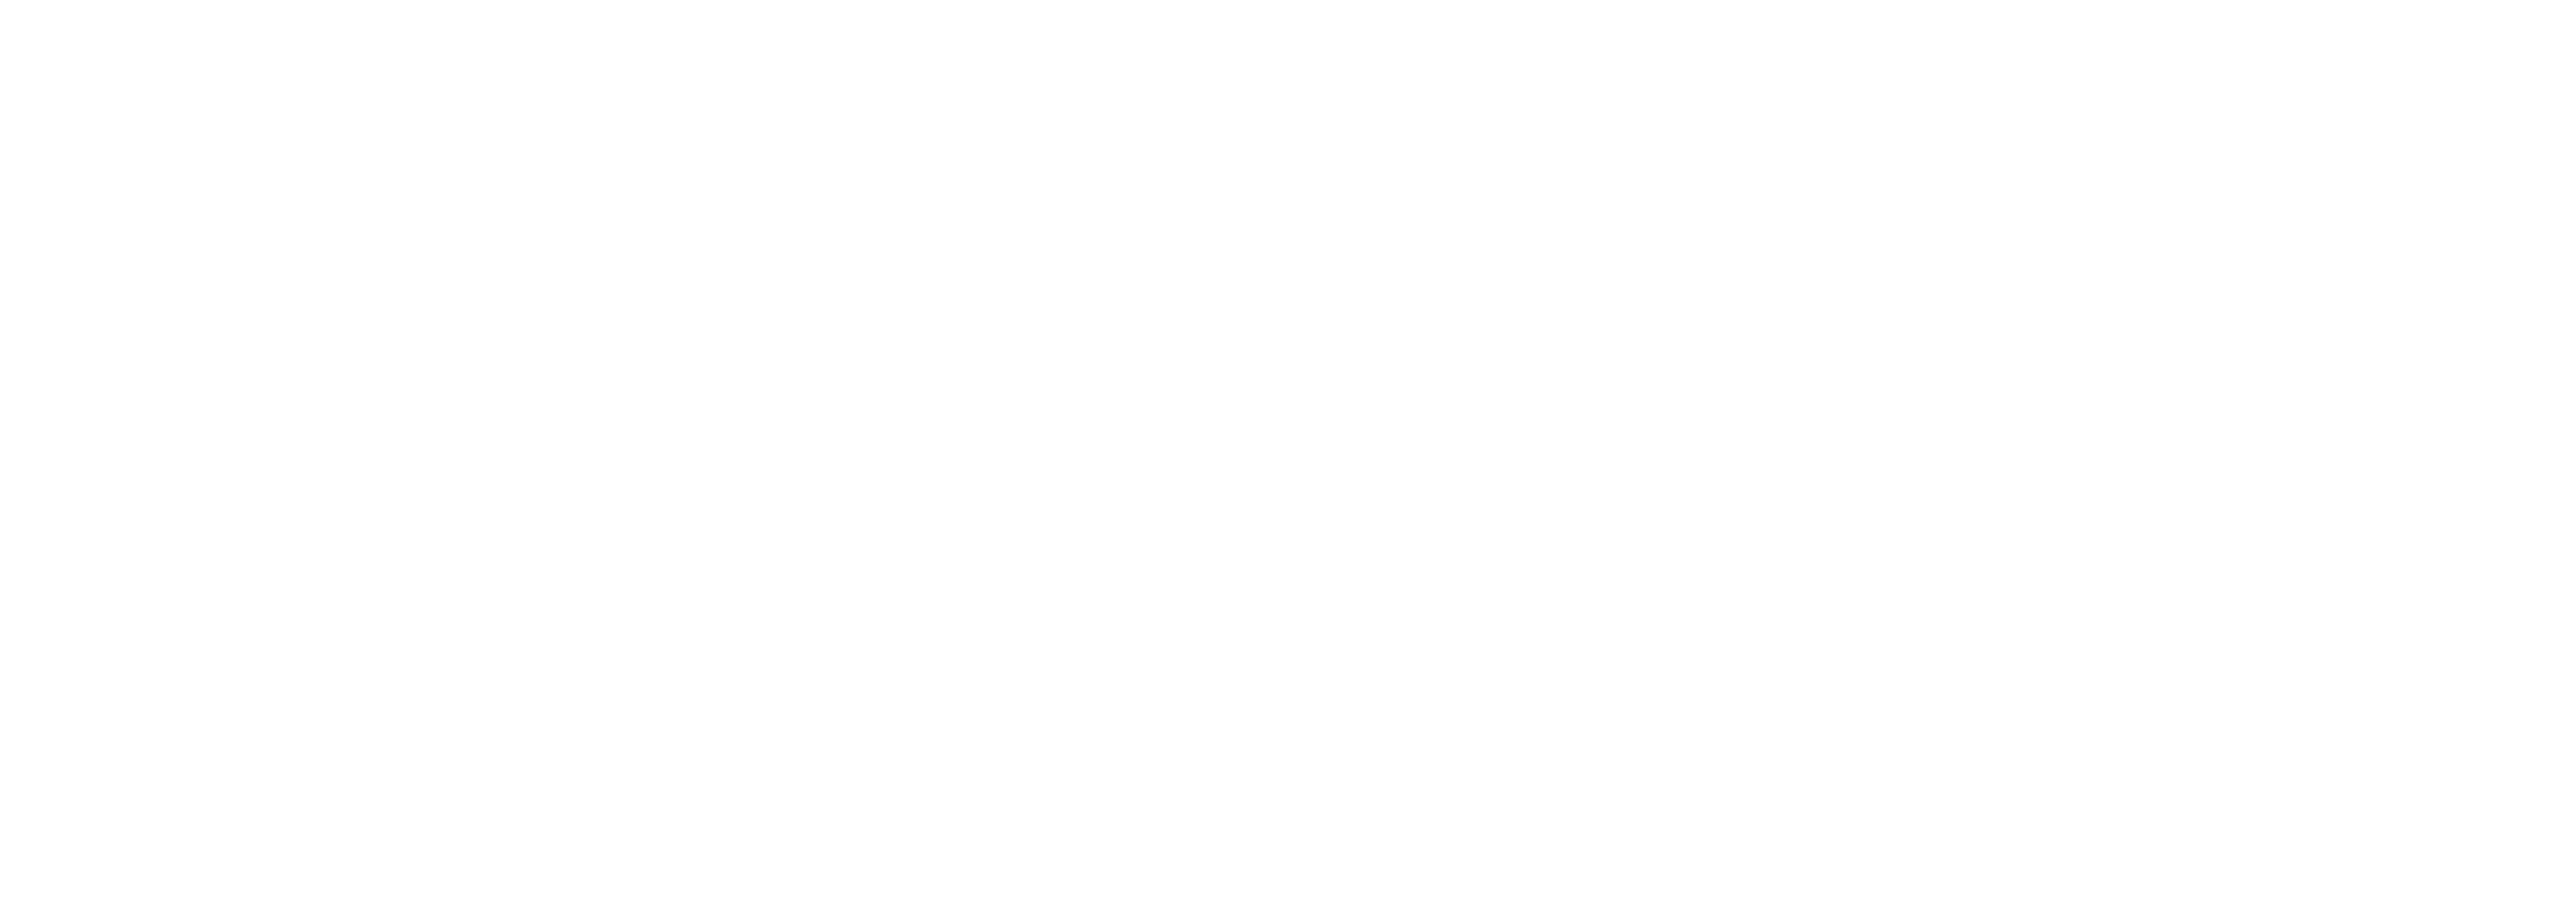 Cold Creek Manor logo